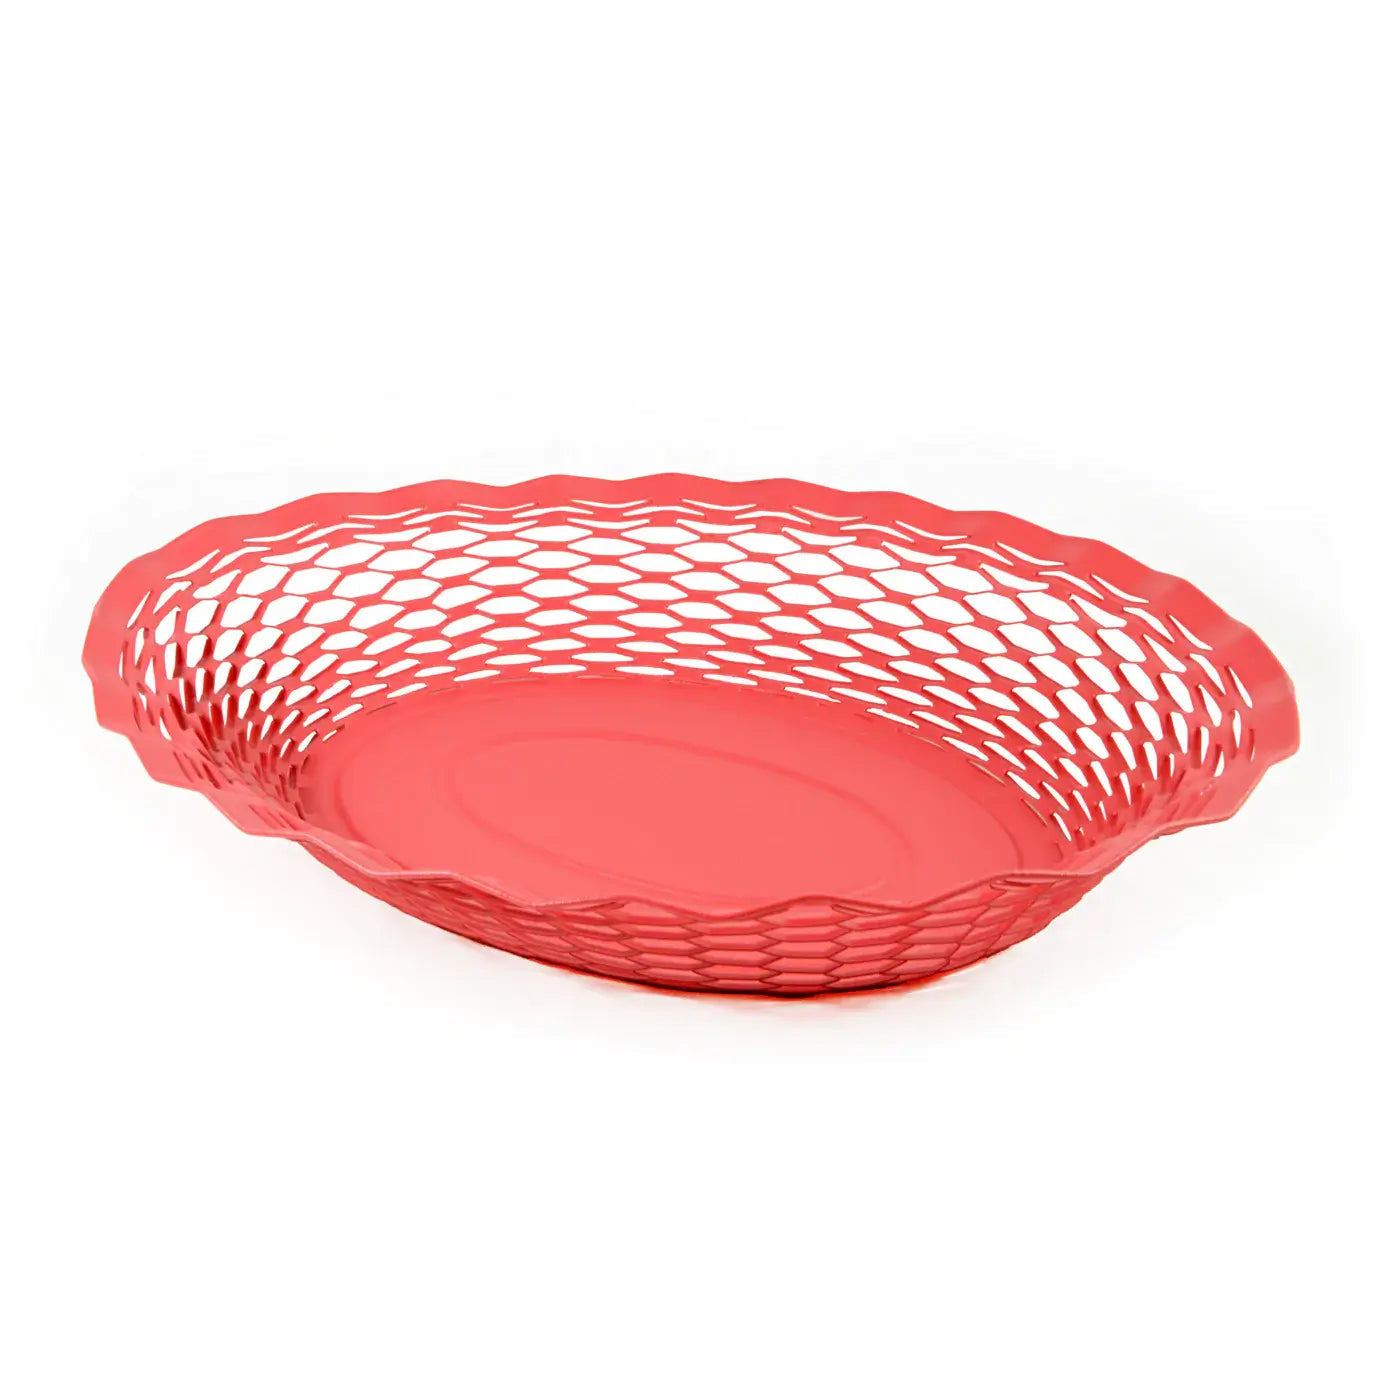 Metal Food Basket Medium by Roger Orfèvre Kitchen ROGER ORFÈVRE Coral Pink Matte Prettycleanshop